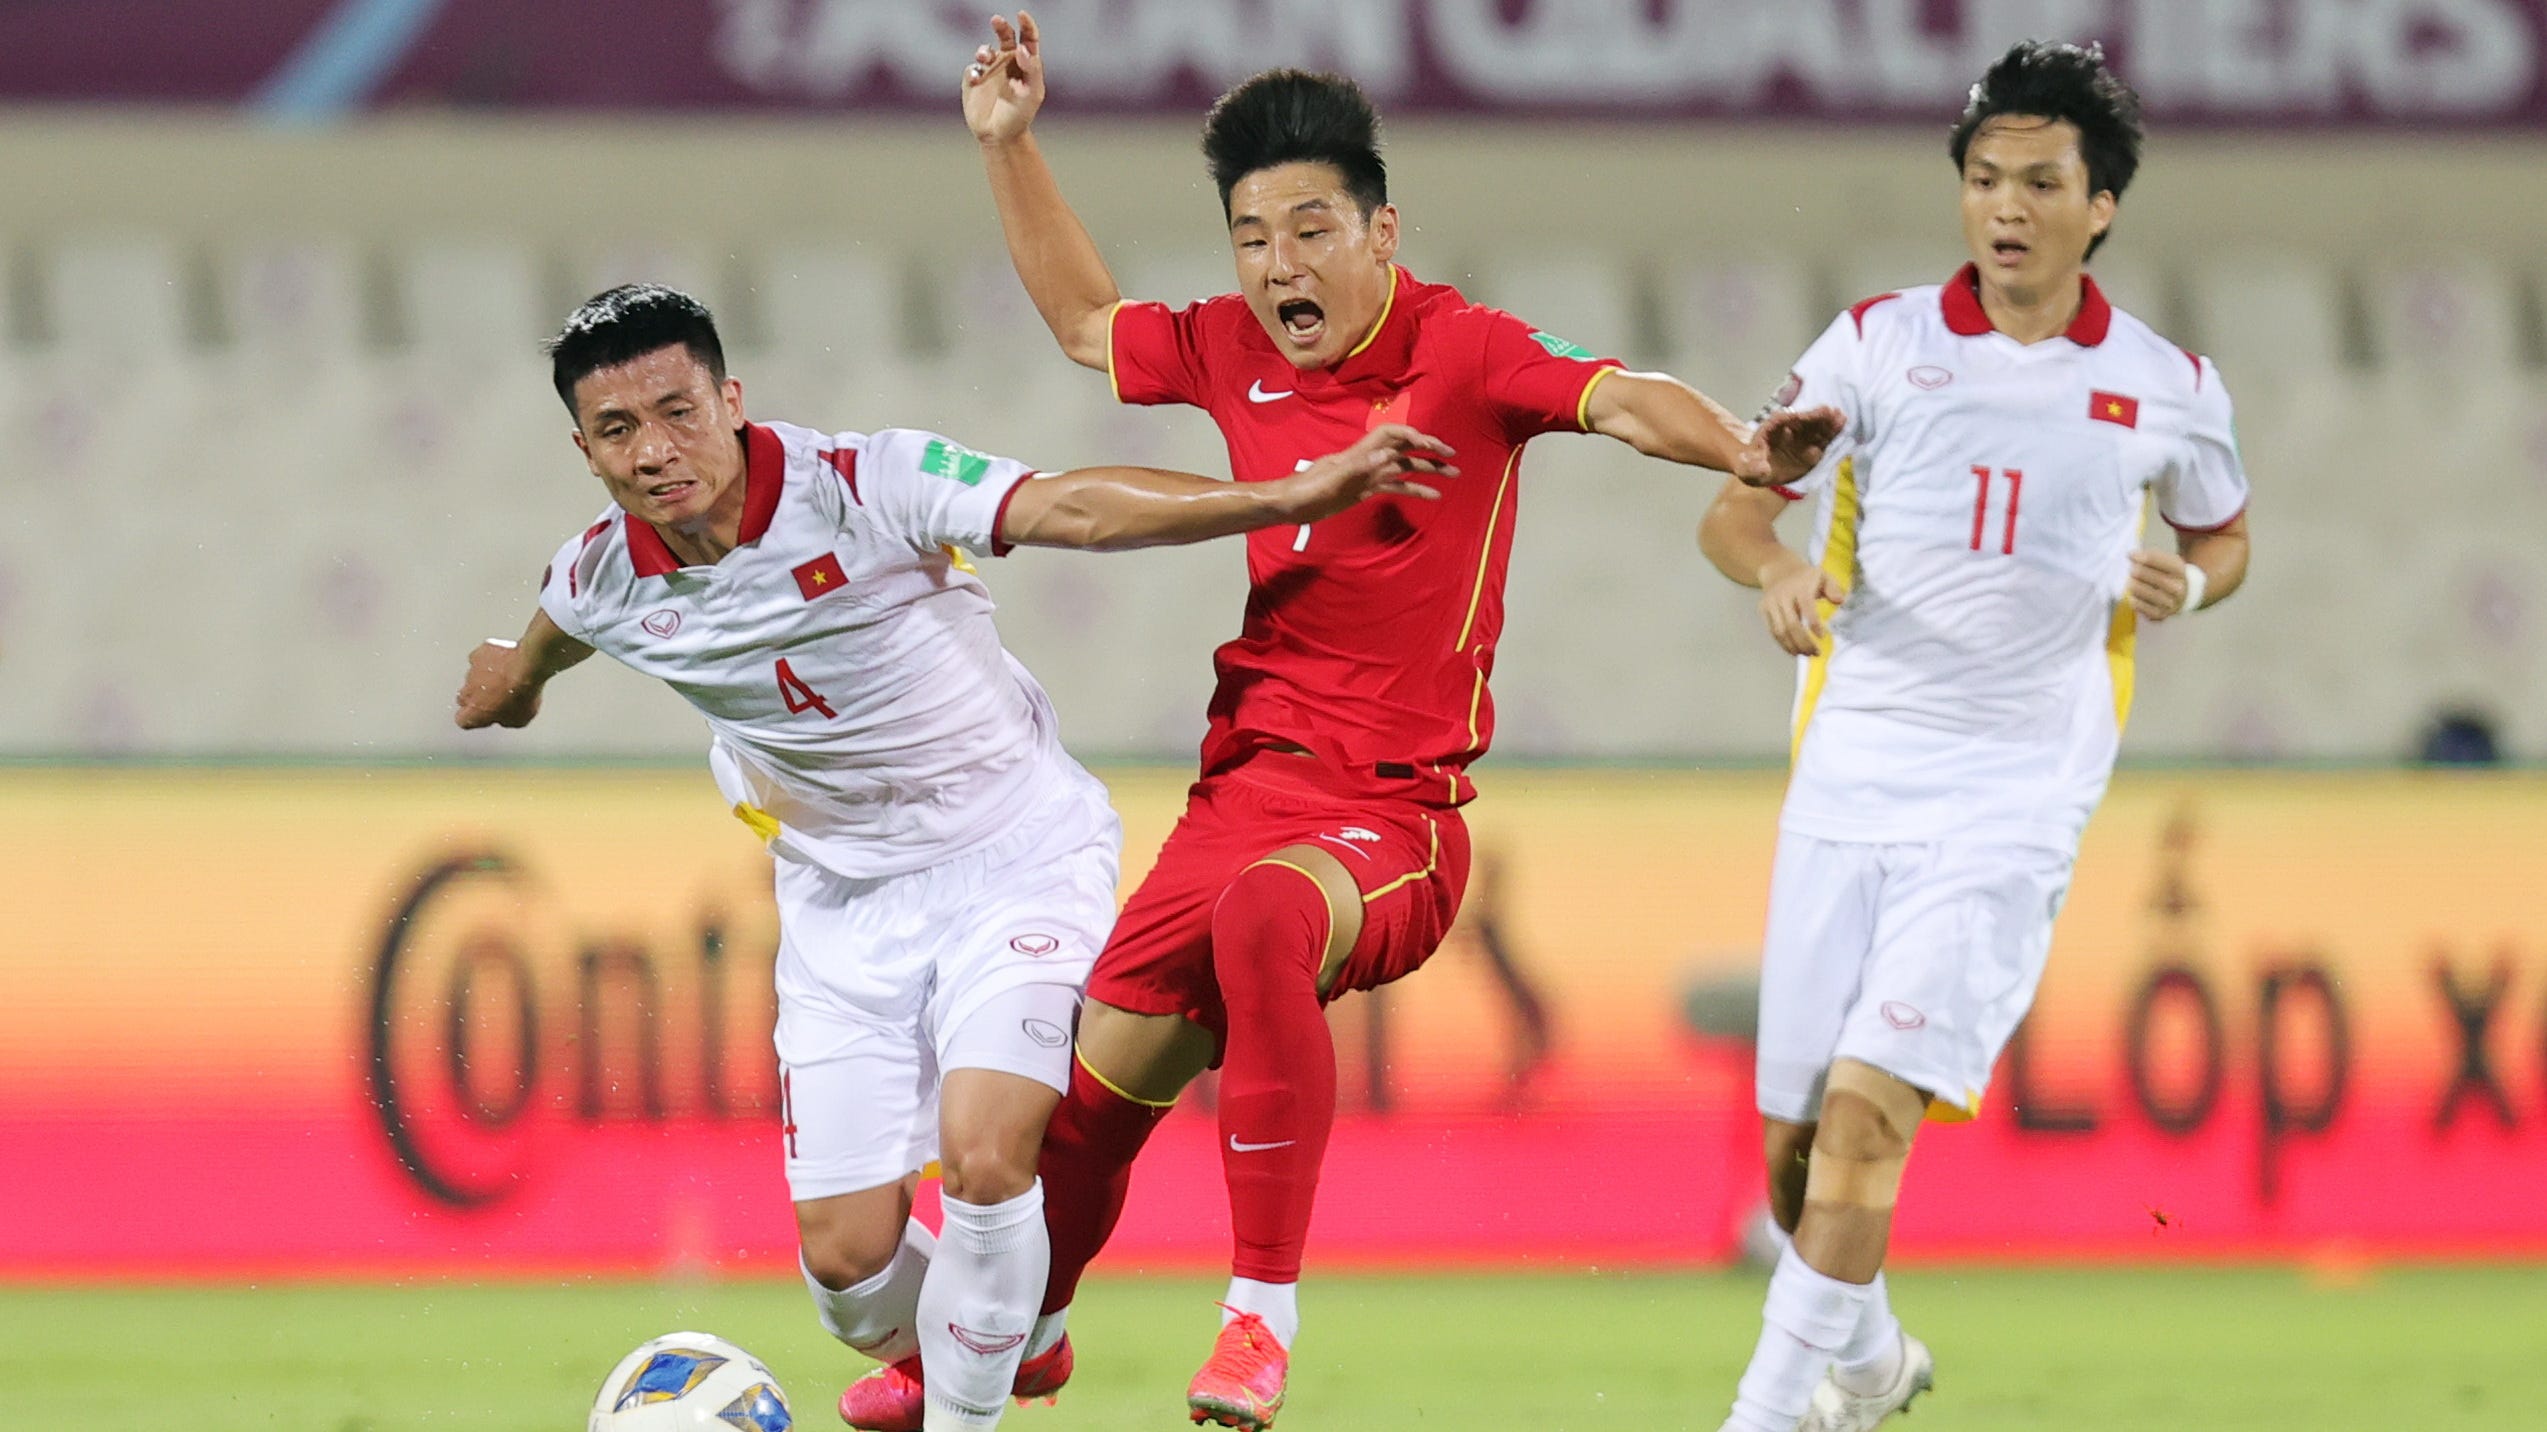 Lei Wu China PR Bui Tien Dung Vietnam FIFA World Cup Asian Qualifier 2021